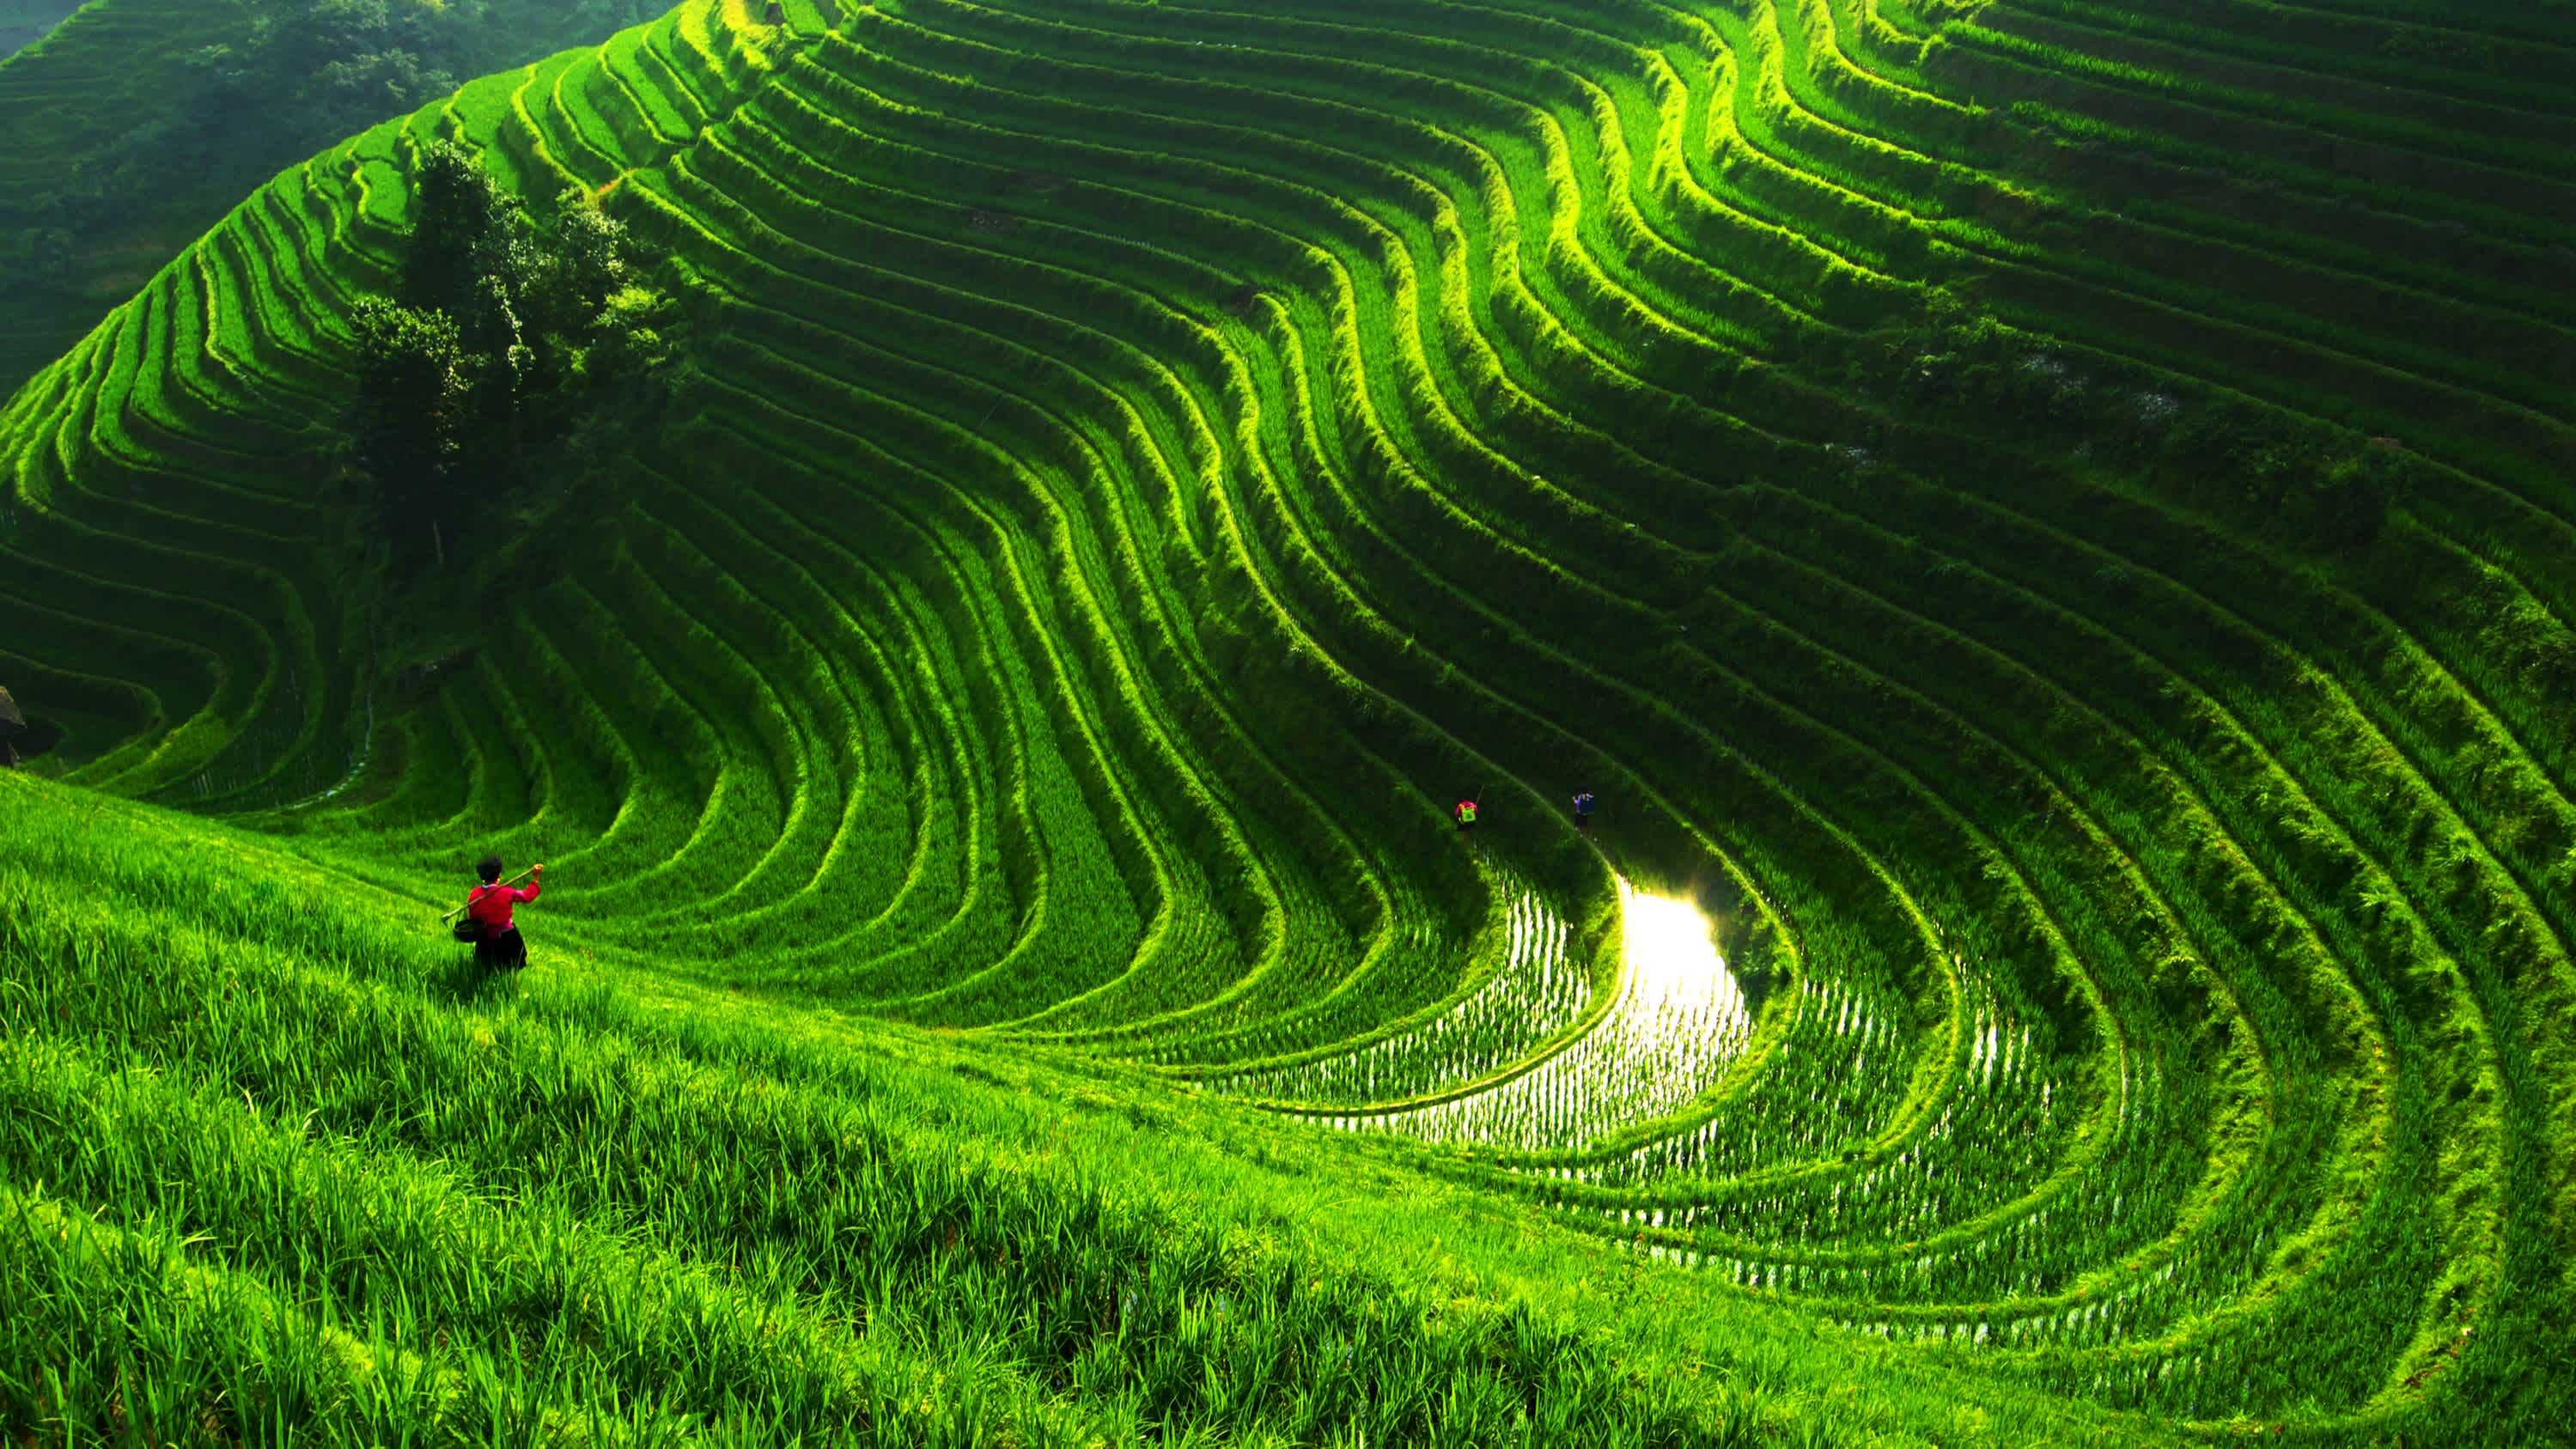 Nobody in green rice terraces in Longsheng, China.